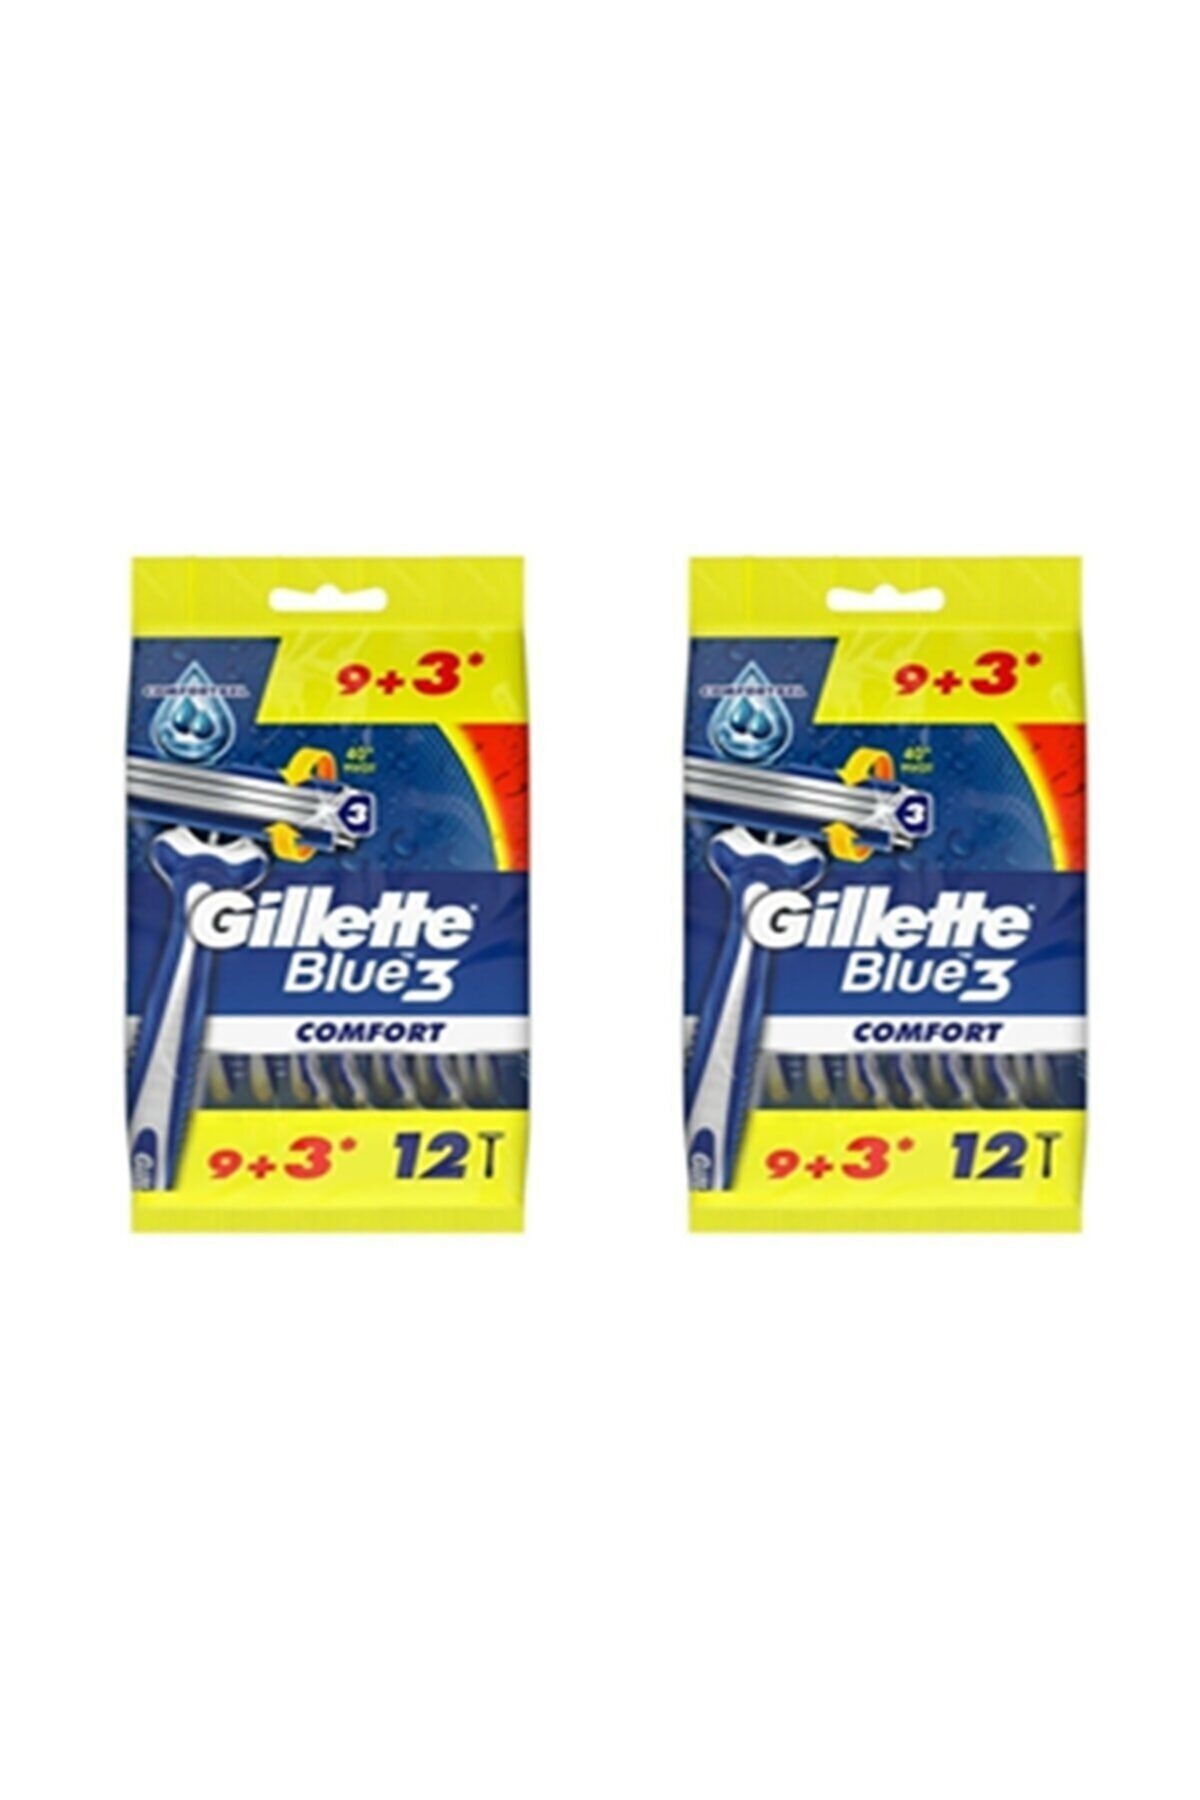 Gillette Blue3 Comfort Kullan At Tıraş Bıçağı 9+3 12'li 2paket